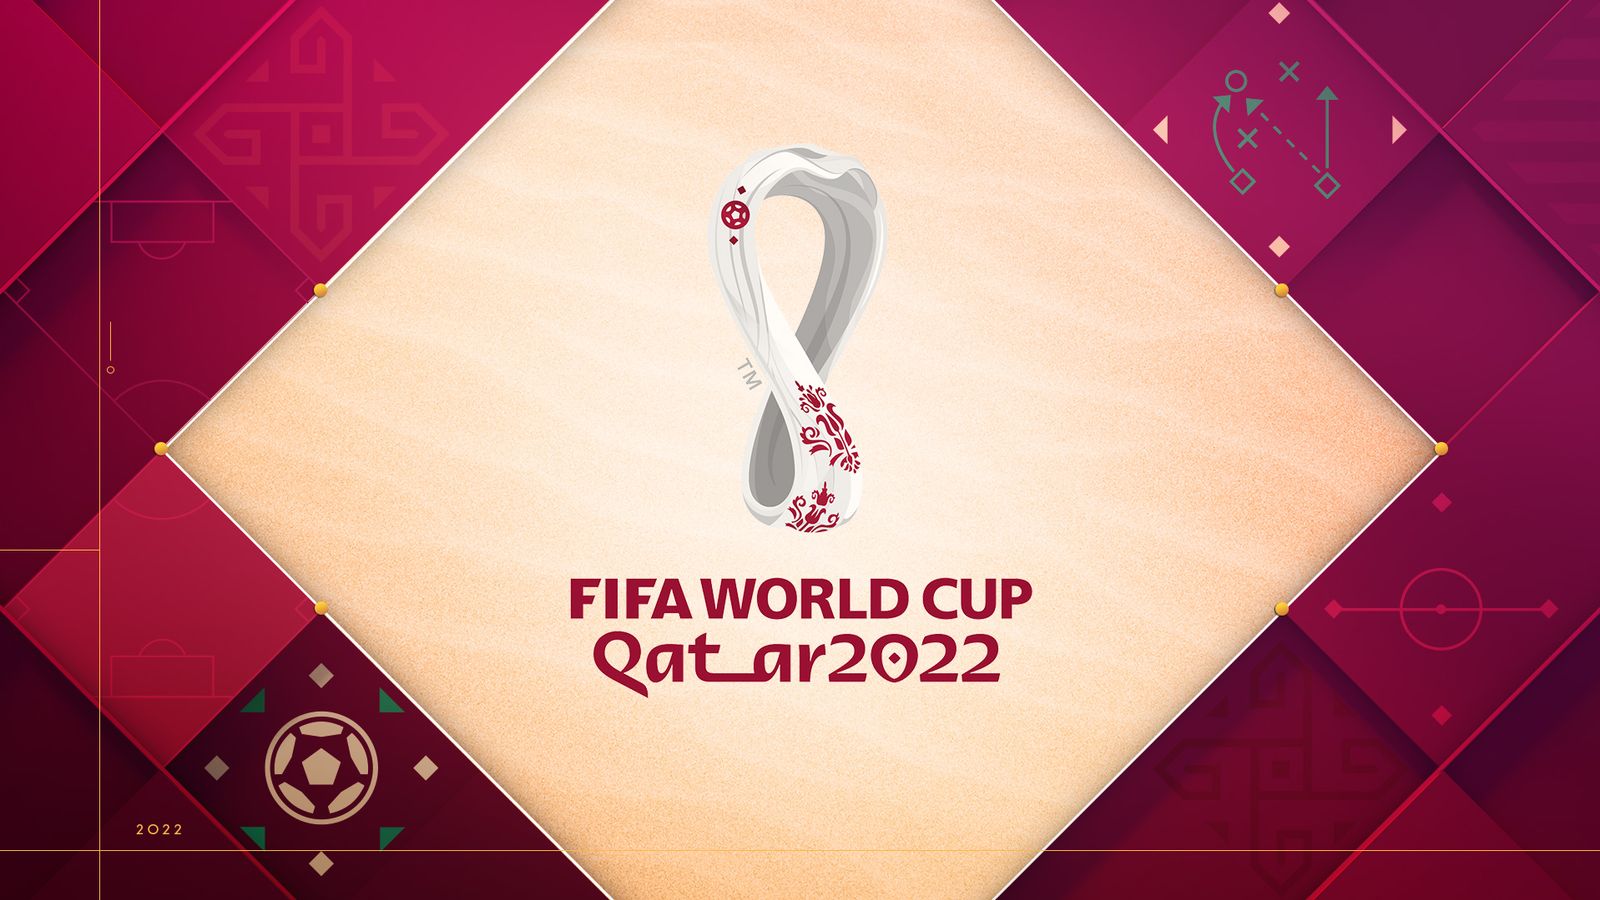 fifa world cup news 2022